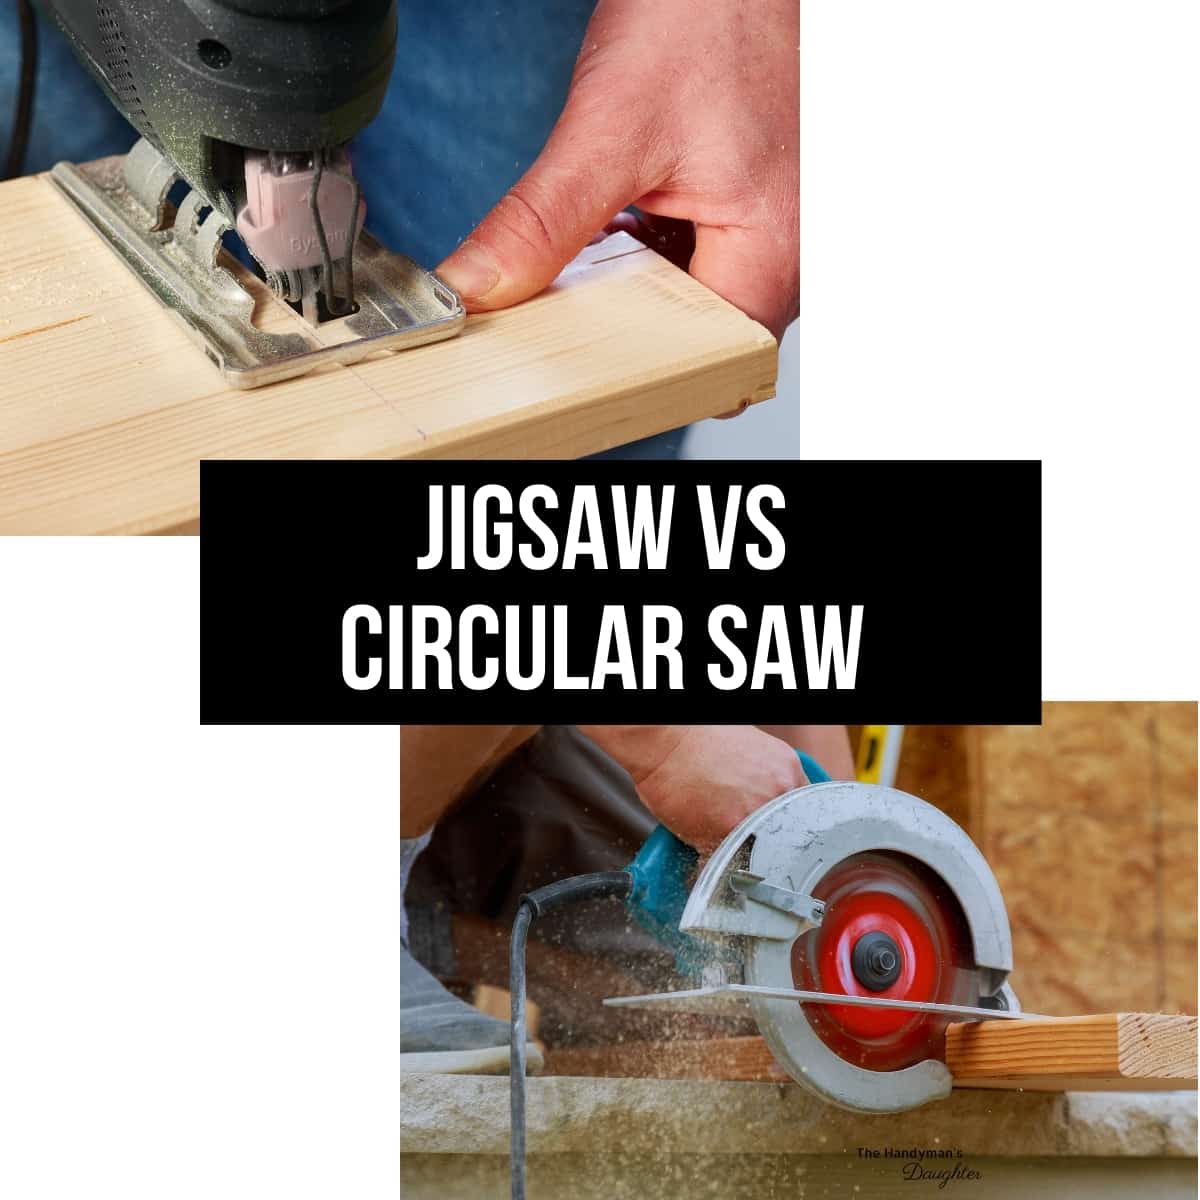 is a jigsaw better than a circular saw? 2